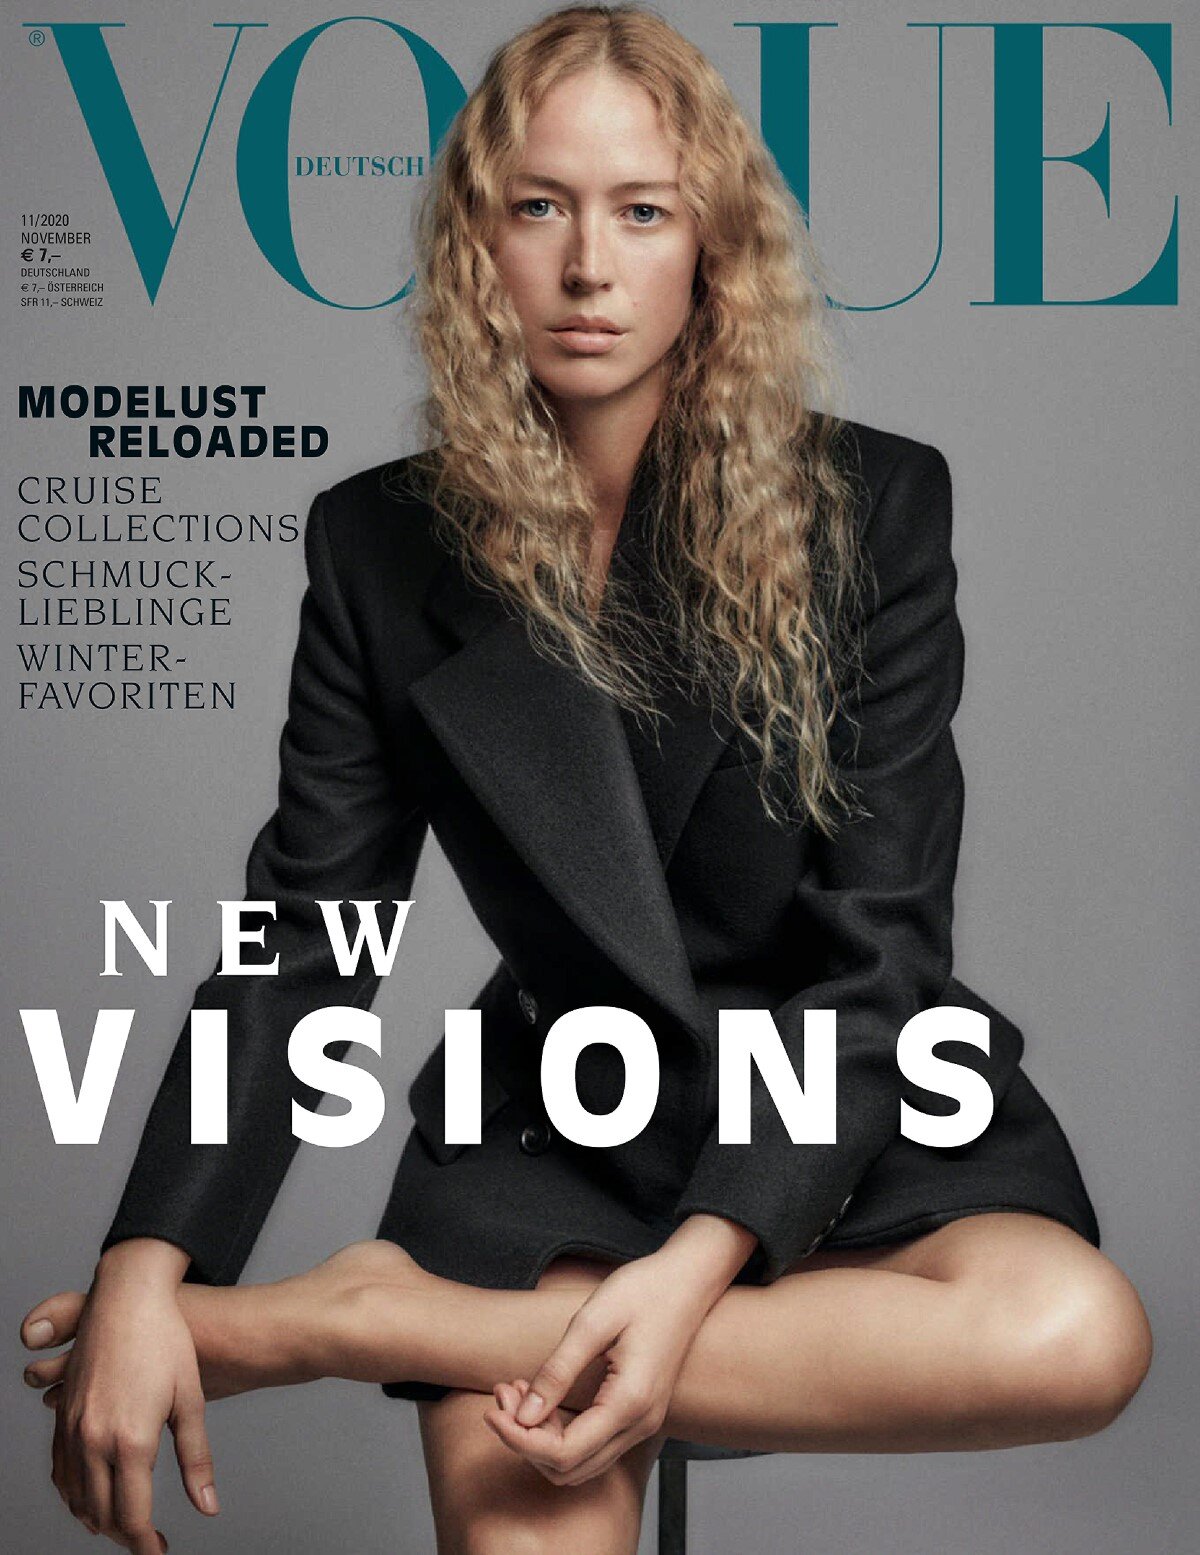 Raquel Zimmermann by Chris Colls for Vogue Germany Nov 2020 (1).jpg